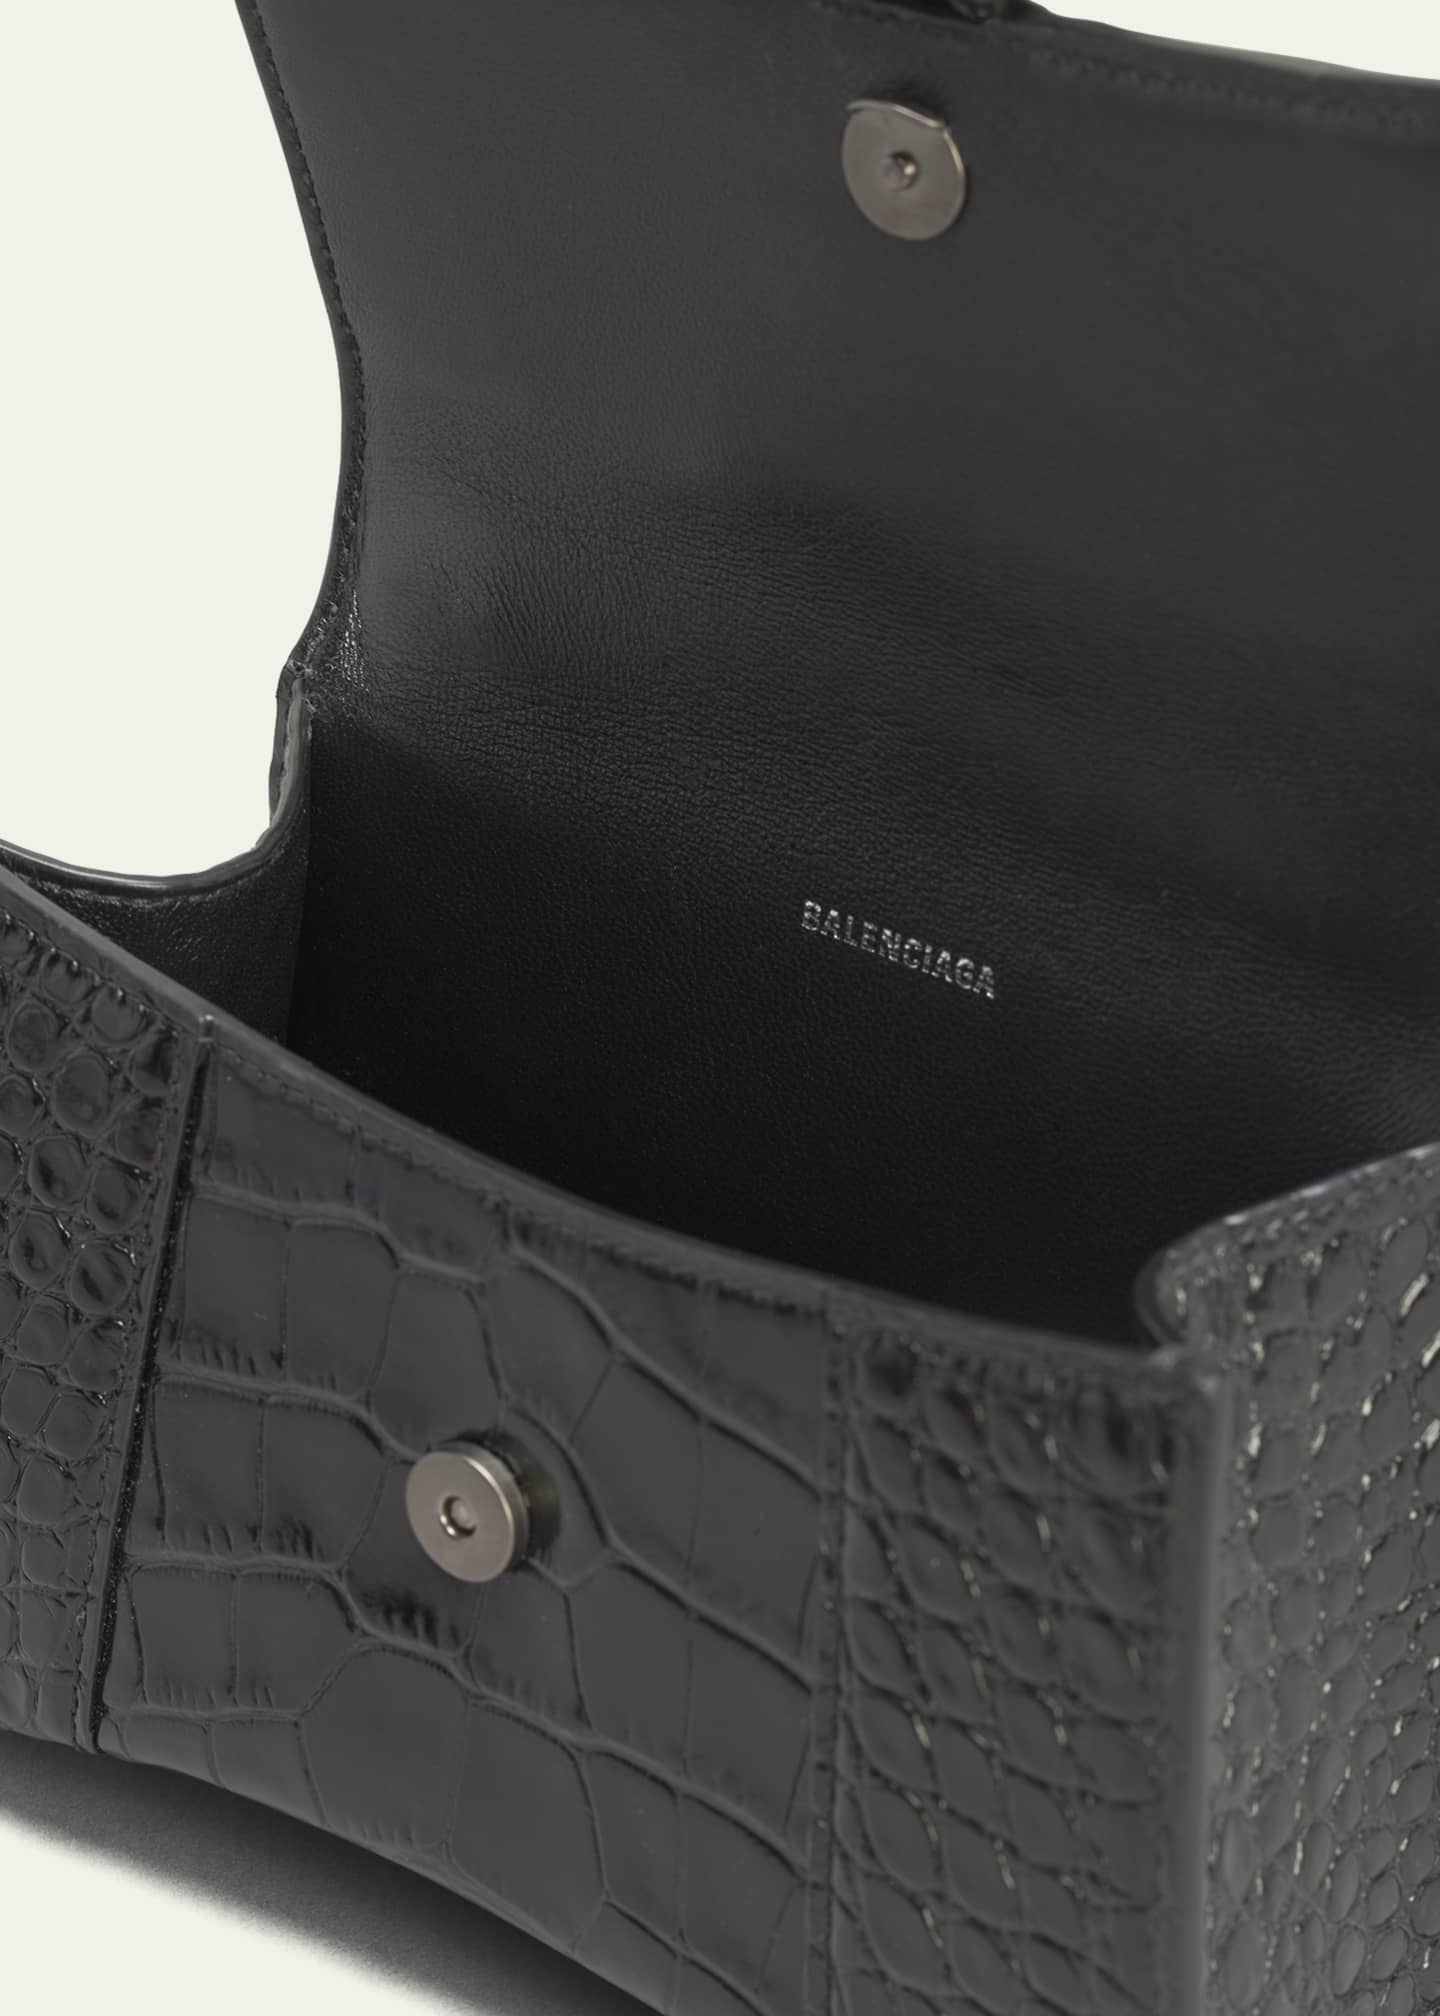 BALENCIAGA: Hourglass top handle Xs bag in crocodile print leather - White